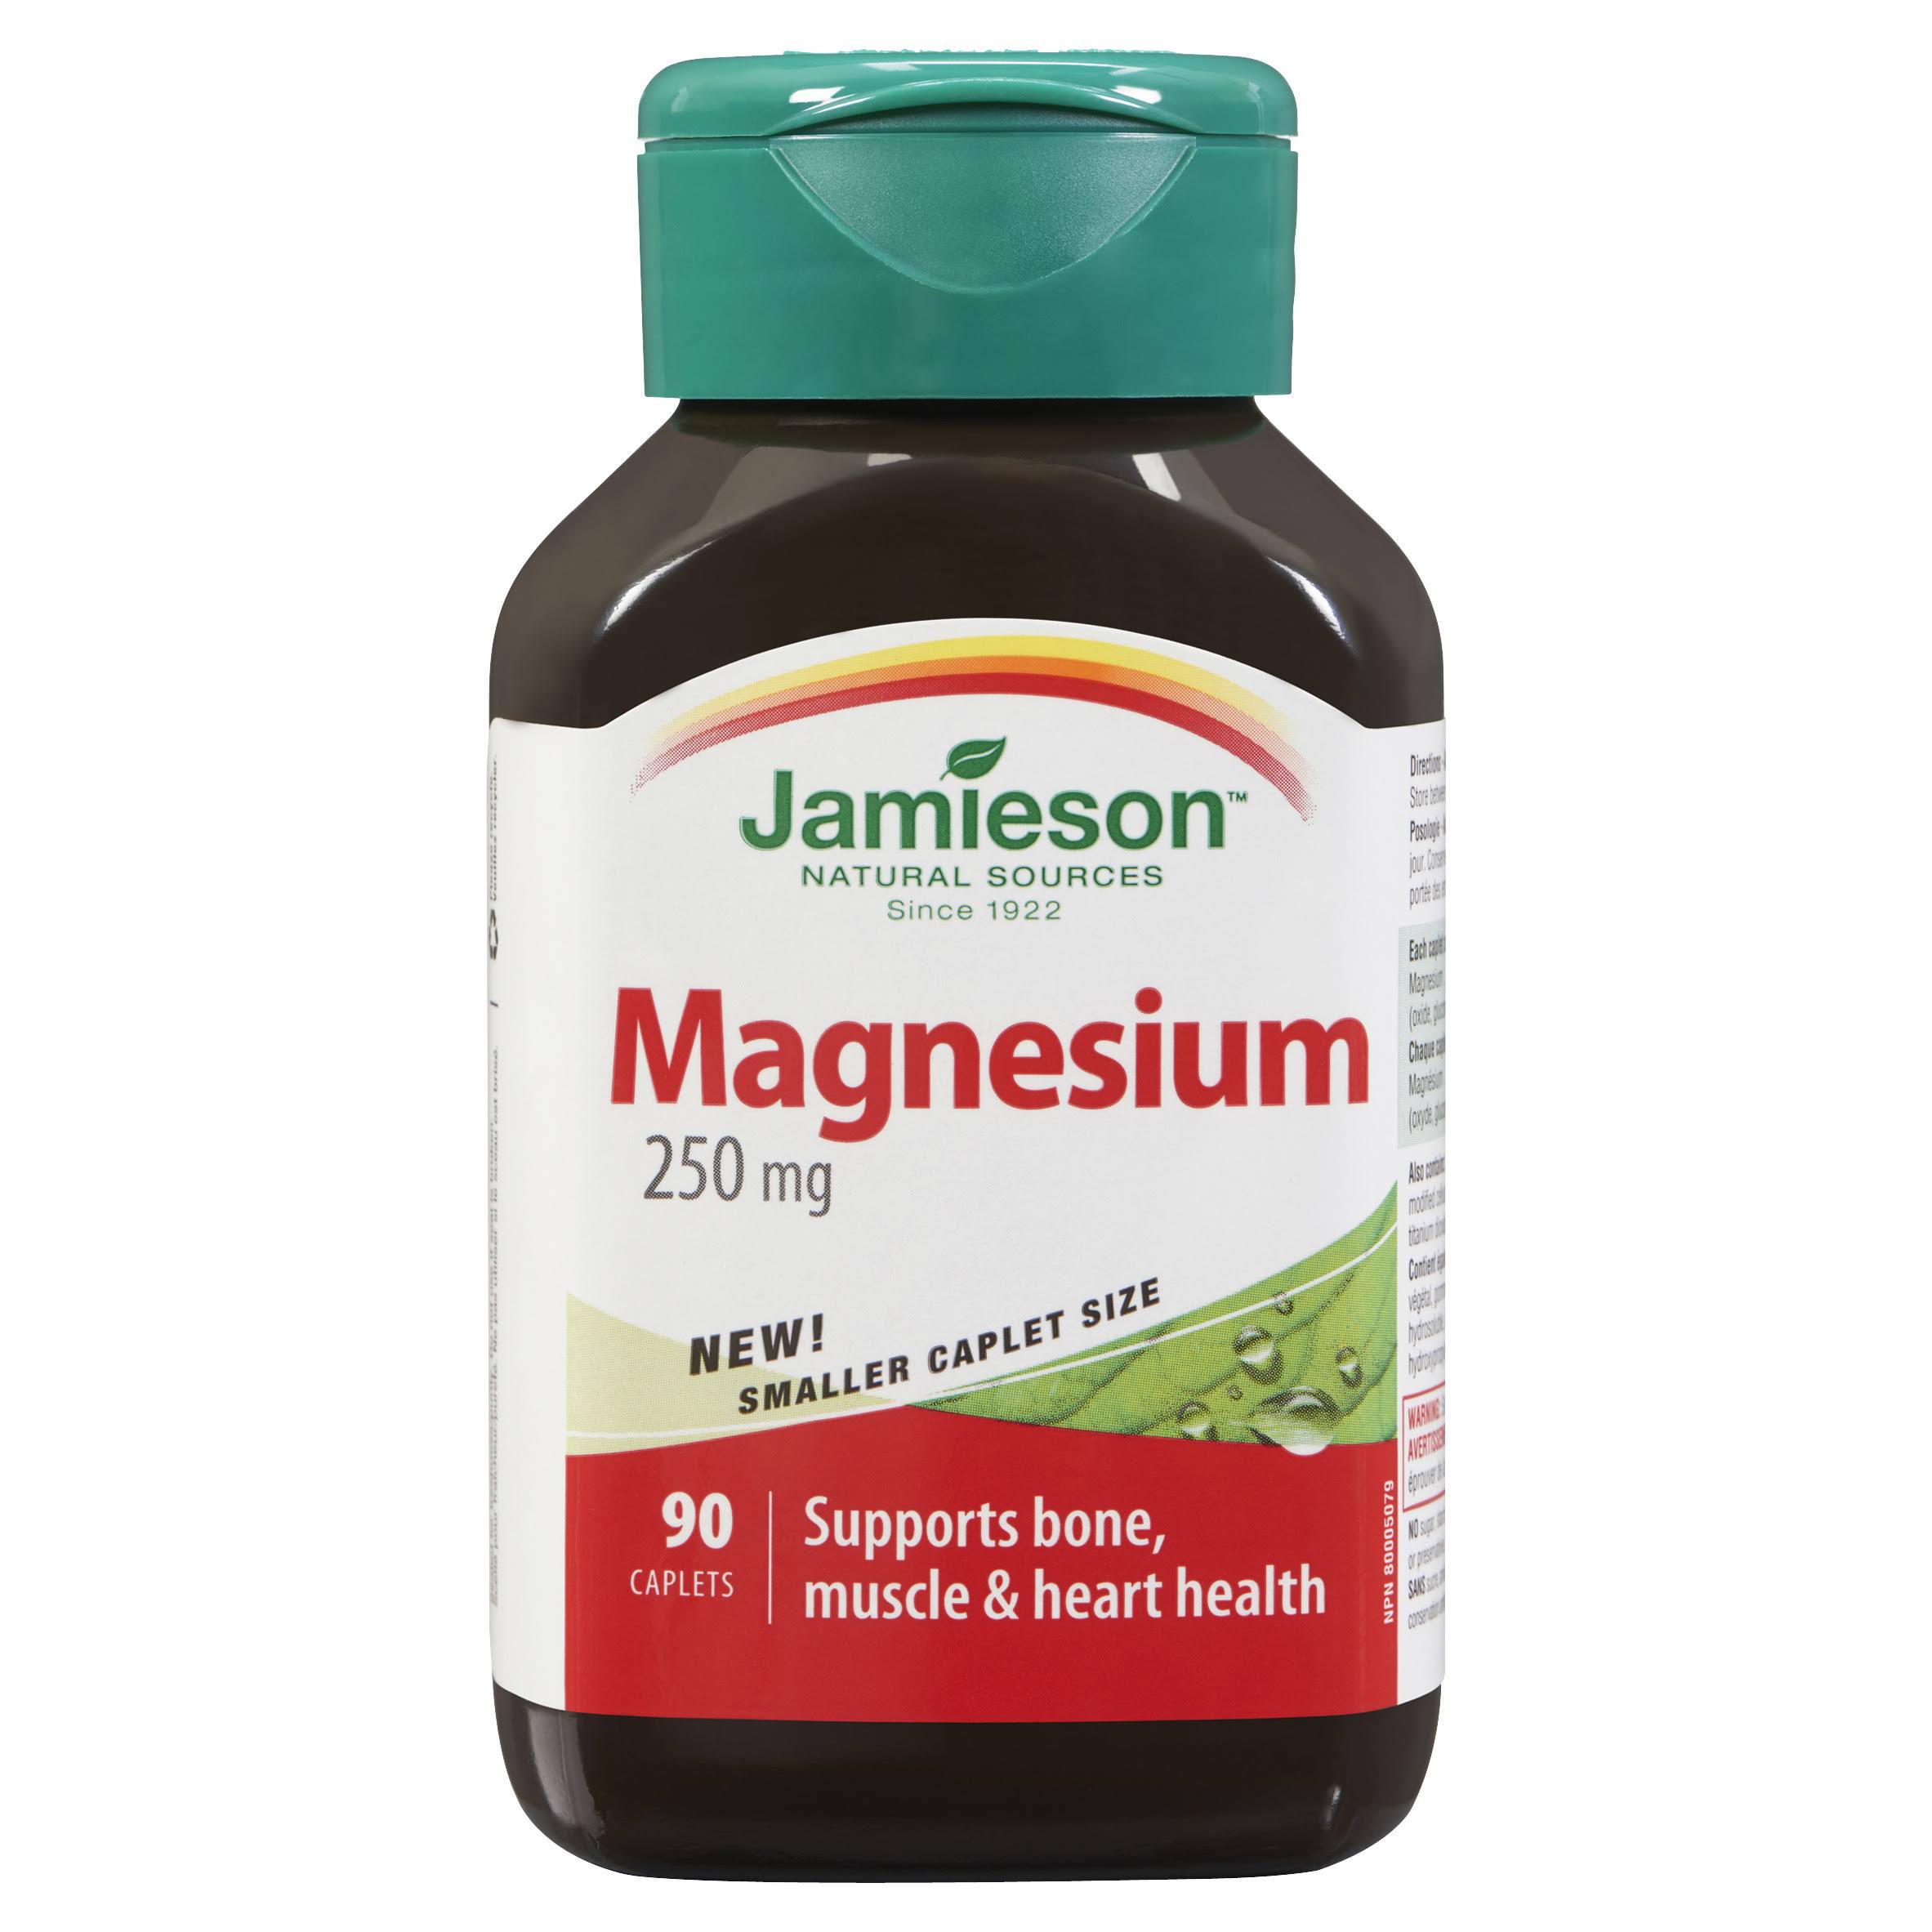 Jamieson High Potency Magnesium Complex Supplement - 90 Caplets, 250mg